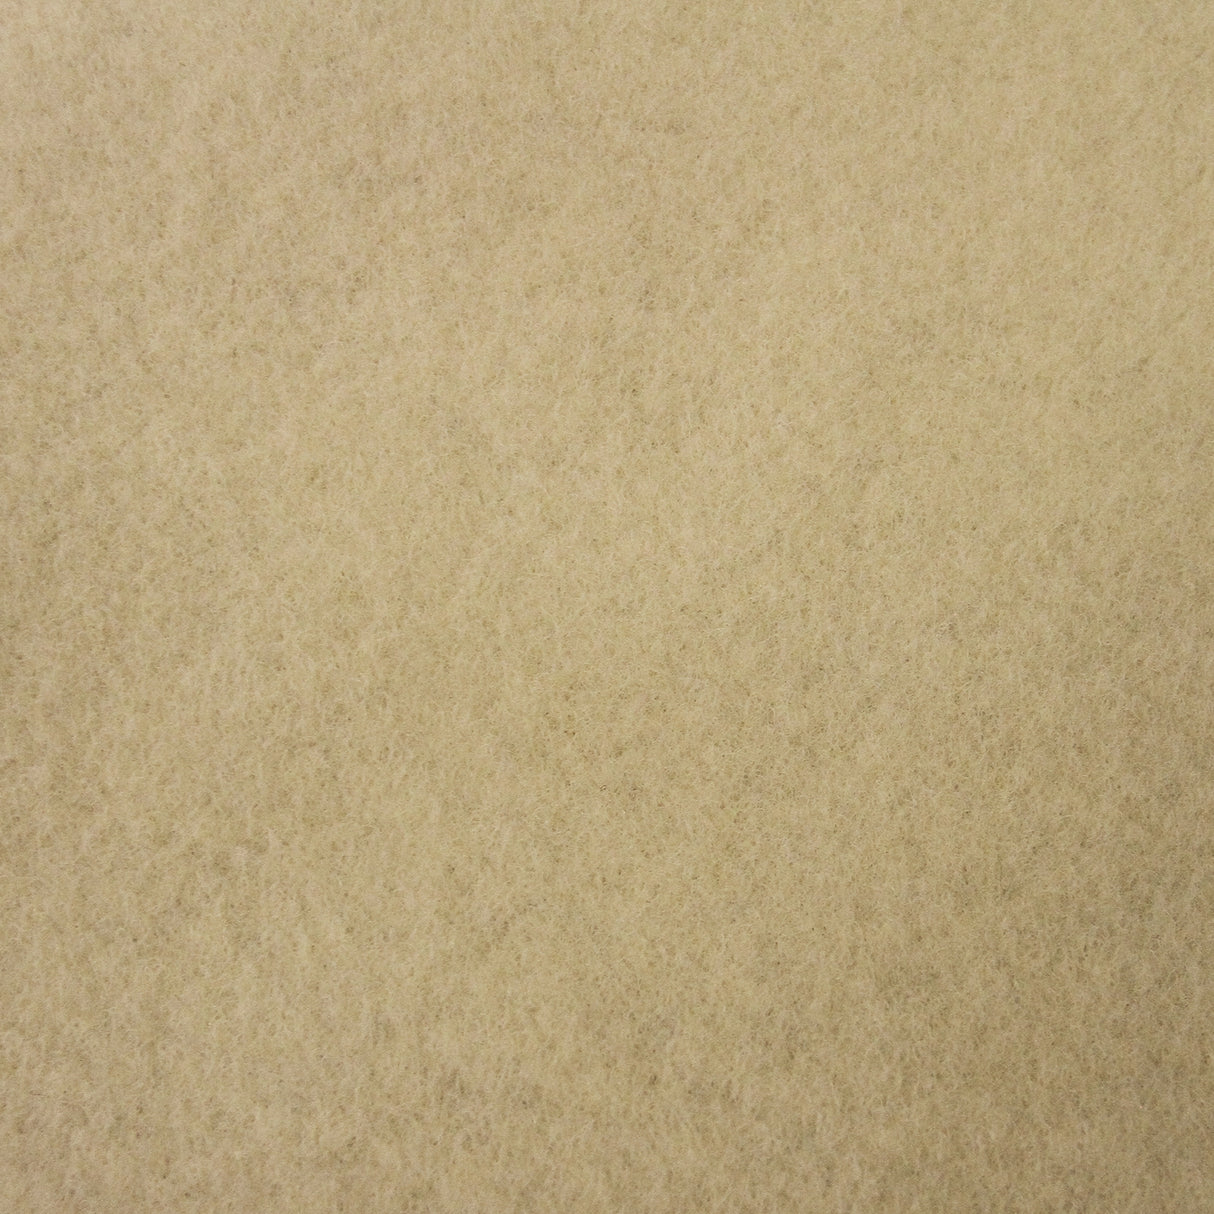 Van Carpet Lining / Wheat & 5 Adhesive Cans